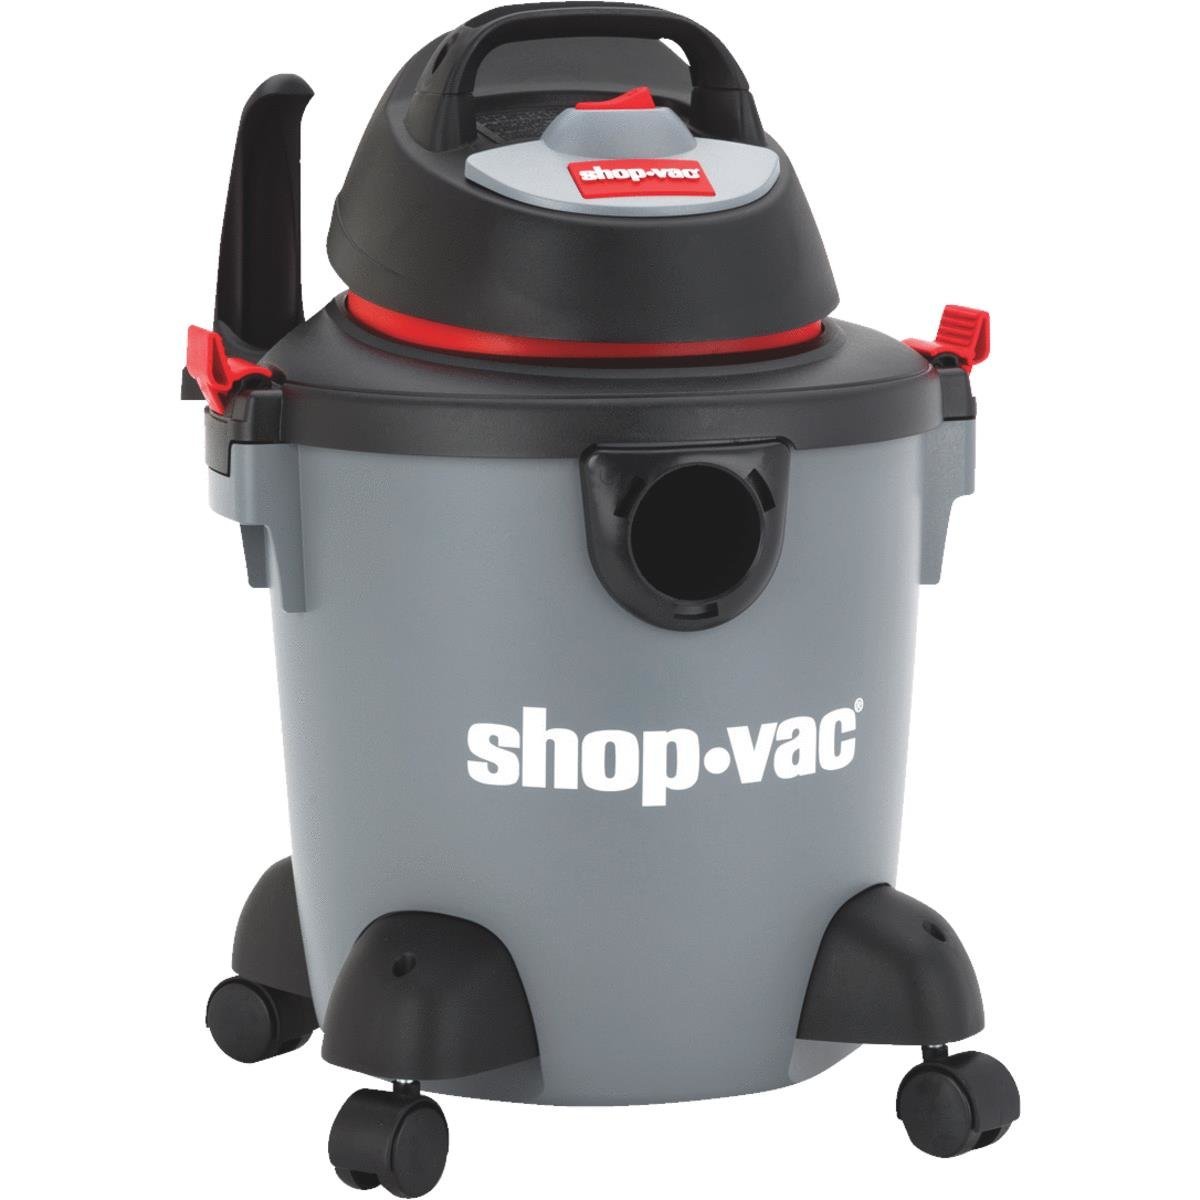 Shop-Vac 5982500 Wet/Dry Utility Vacuum, 2.0 Peak HP, 5-Gallon